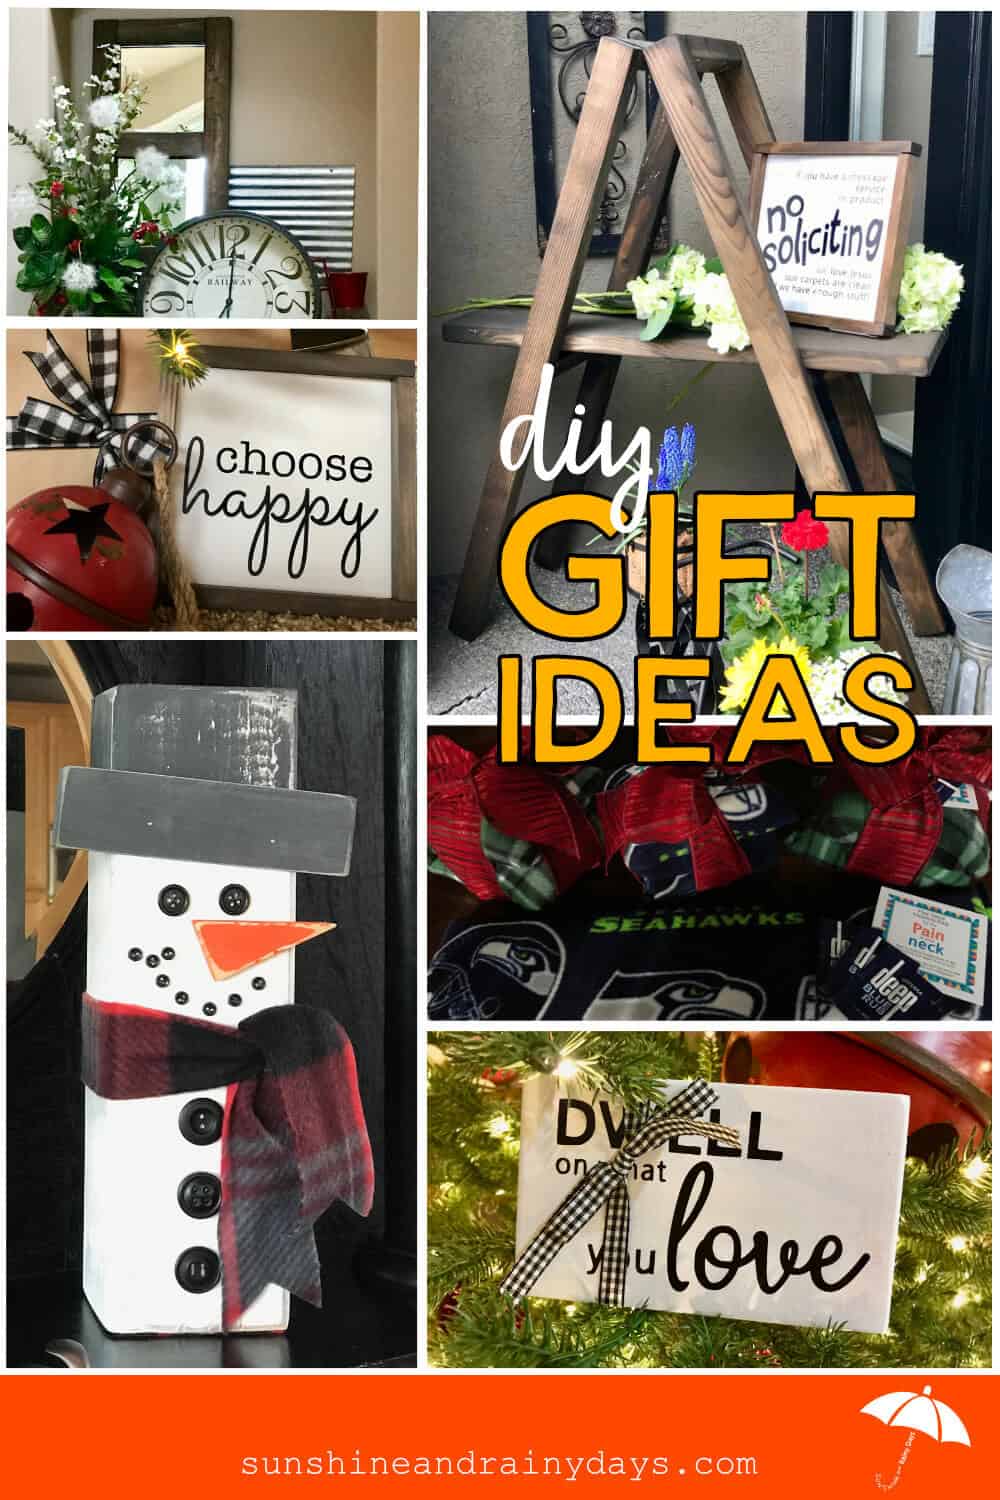 DIY Gift Ideas